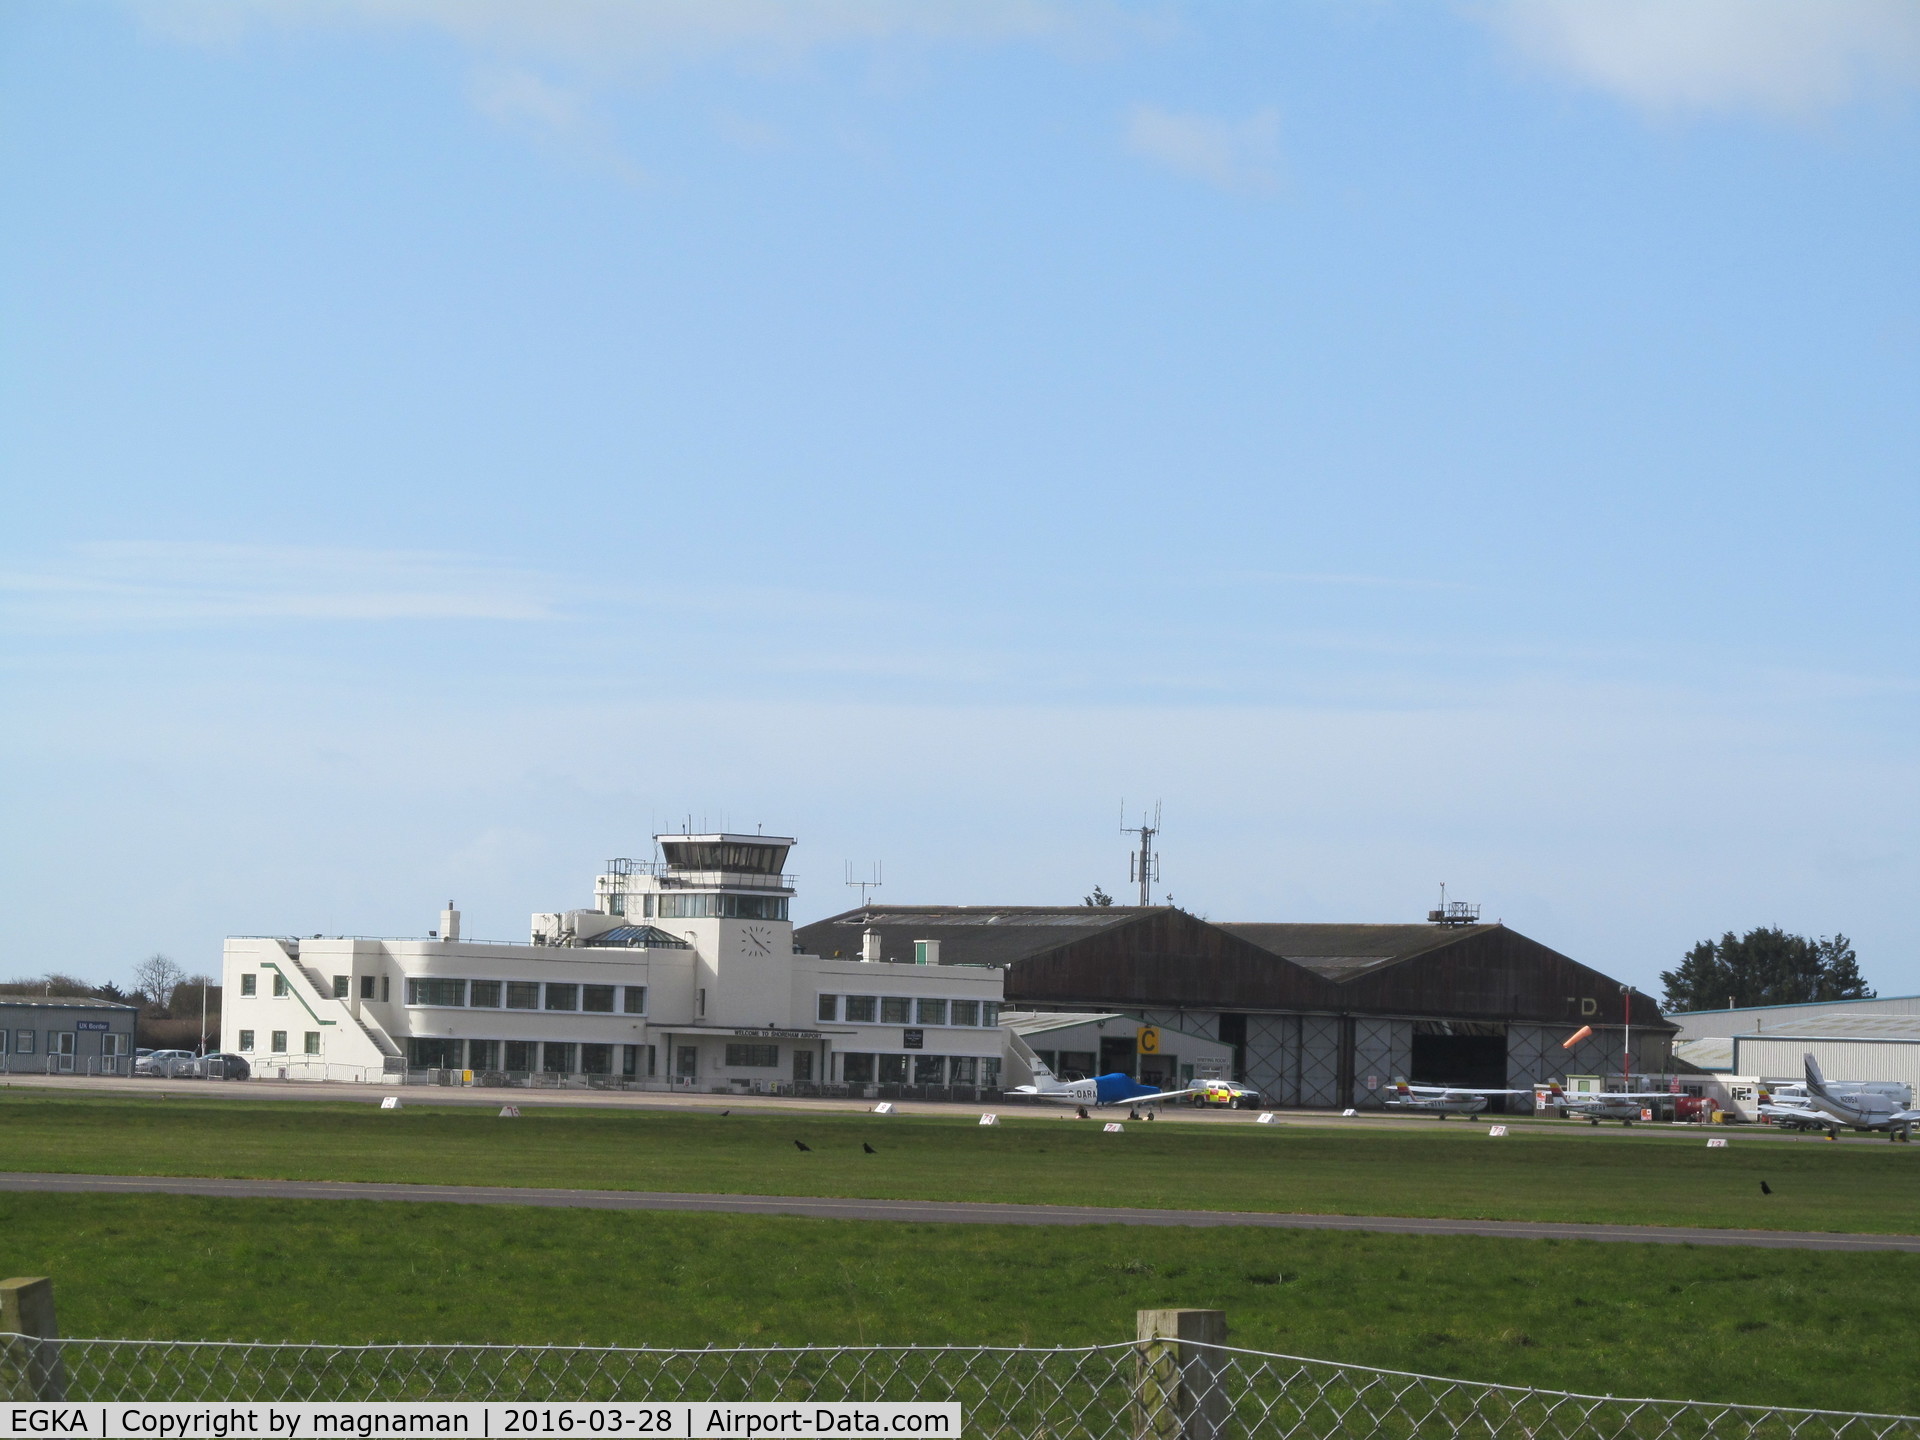 Shoreham Airport, Shoreham United Kingdom (EGKA) - view from access road